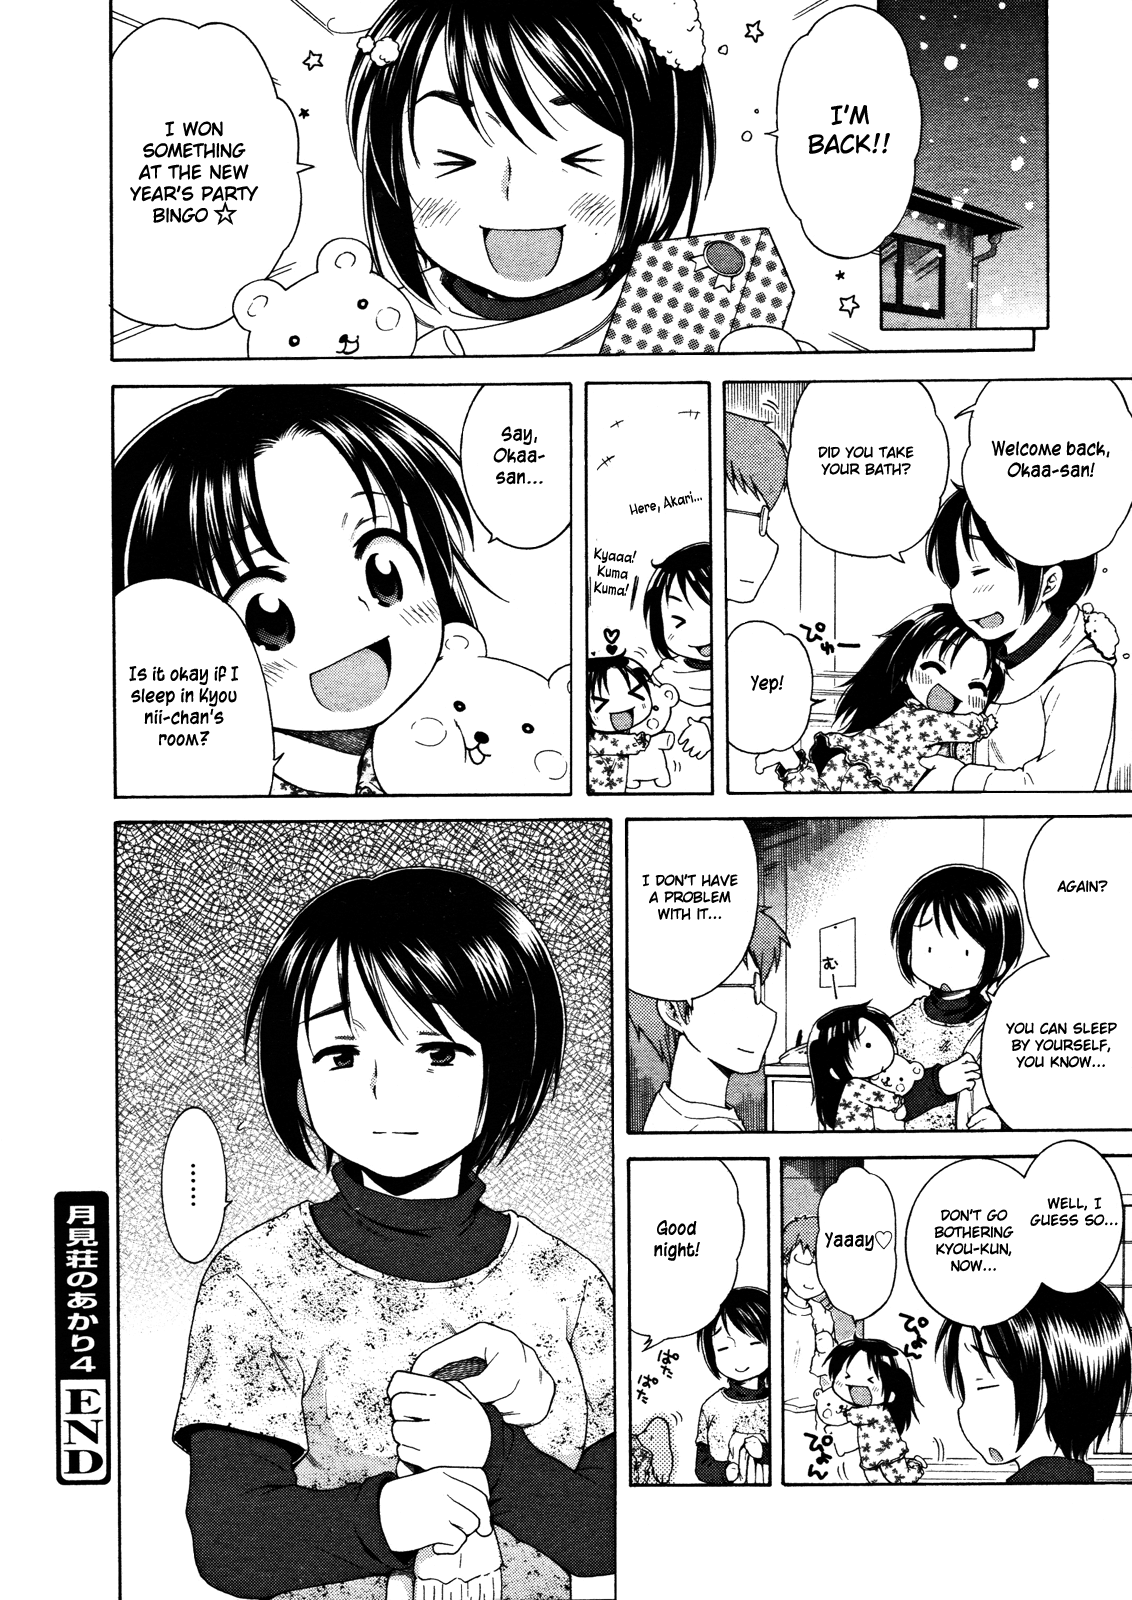 The Light of Tsukimi Manor 1-6 hentai manga picture 93